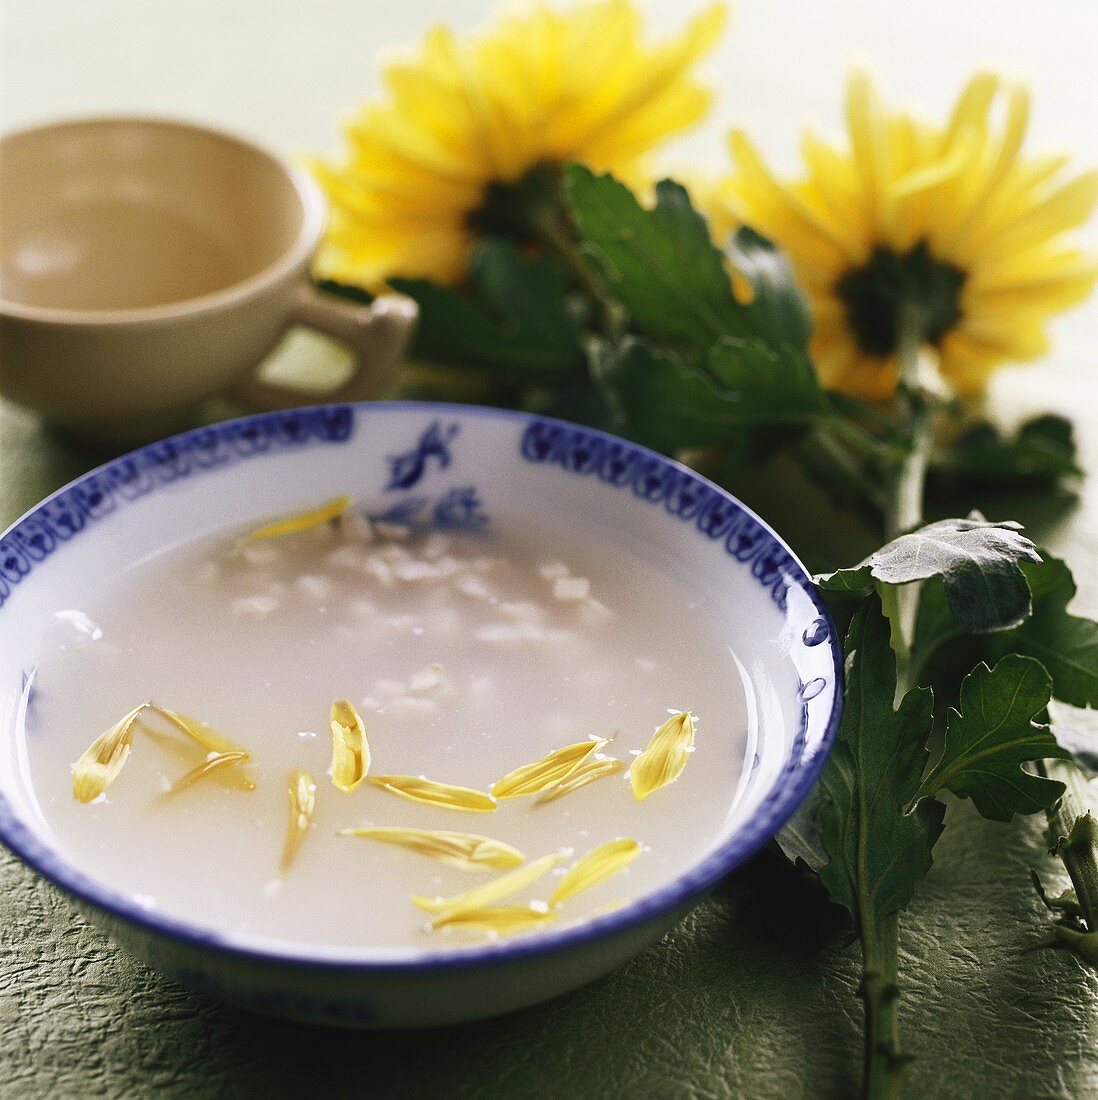 Fish soup with chrysanthemum petals